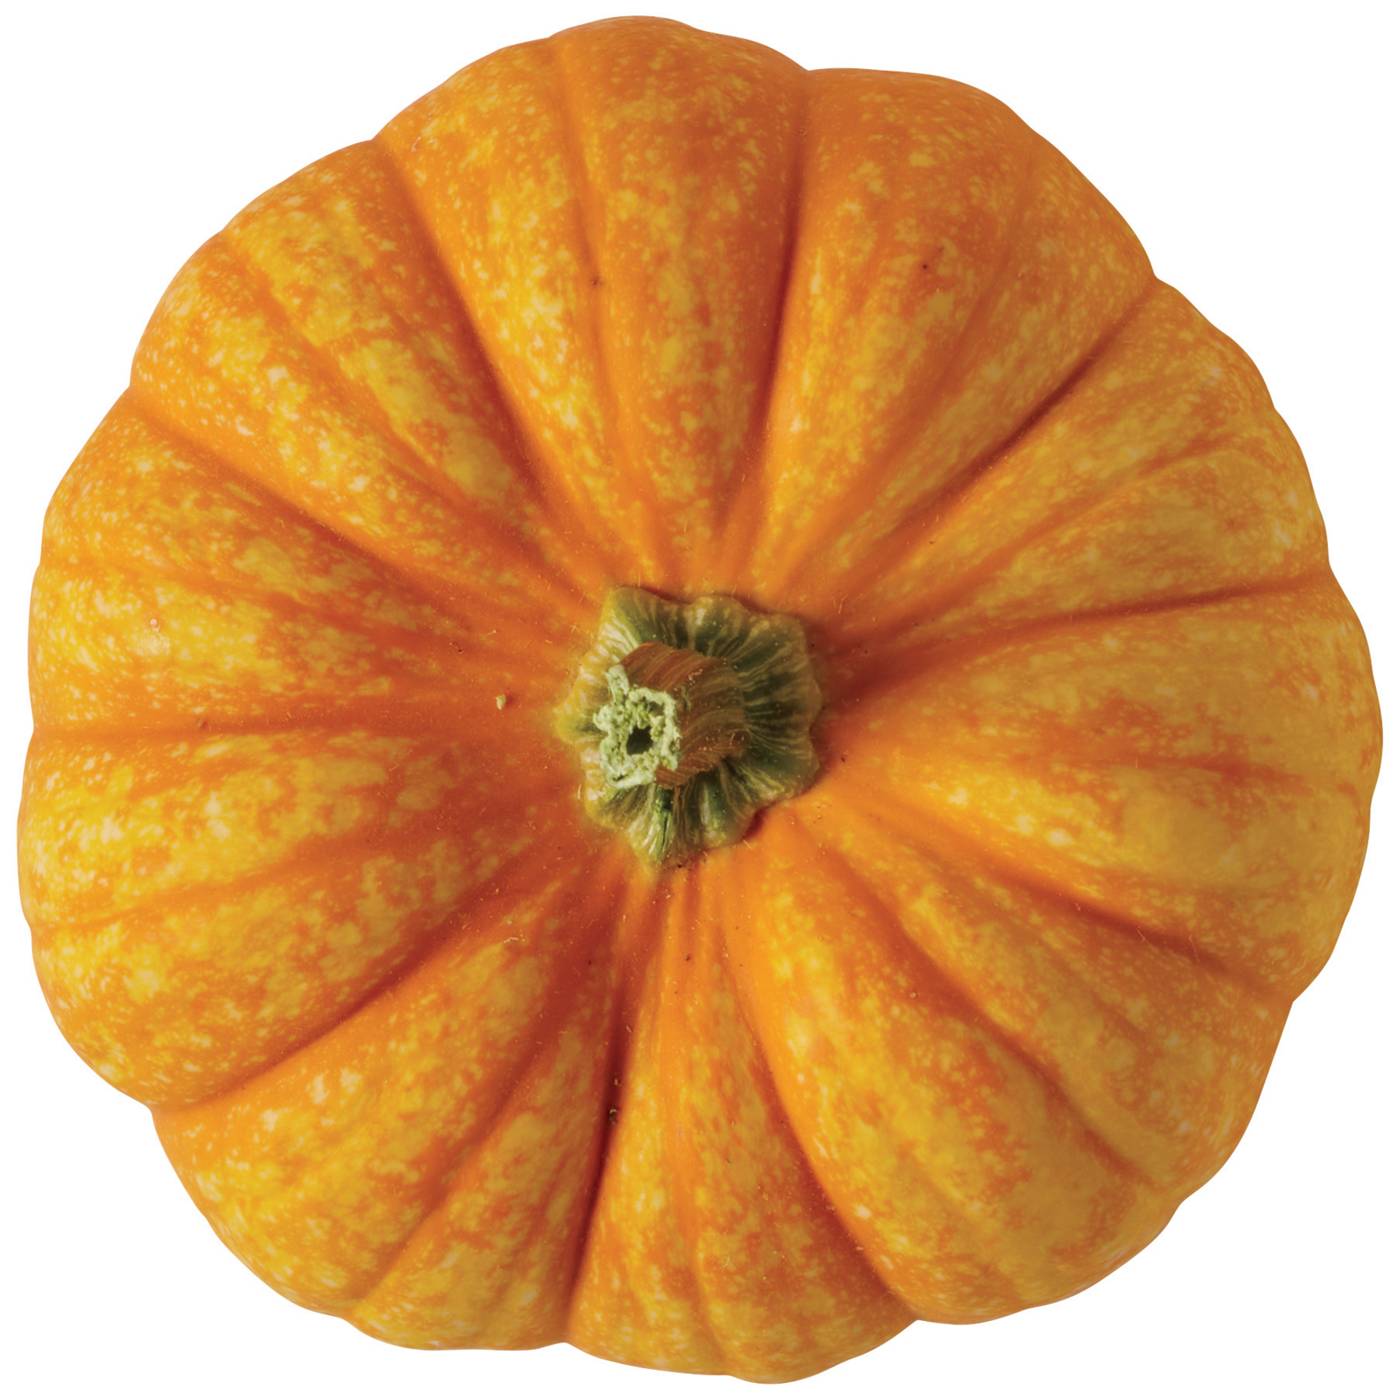 H-E-B Texas Roots Orange Sparkler Pumpkin; image 2 of 5